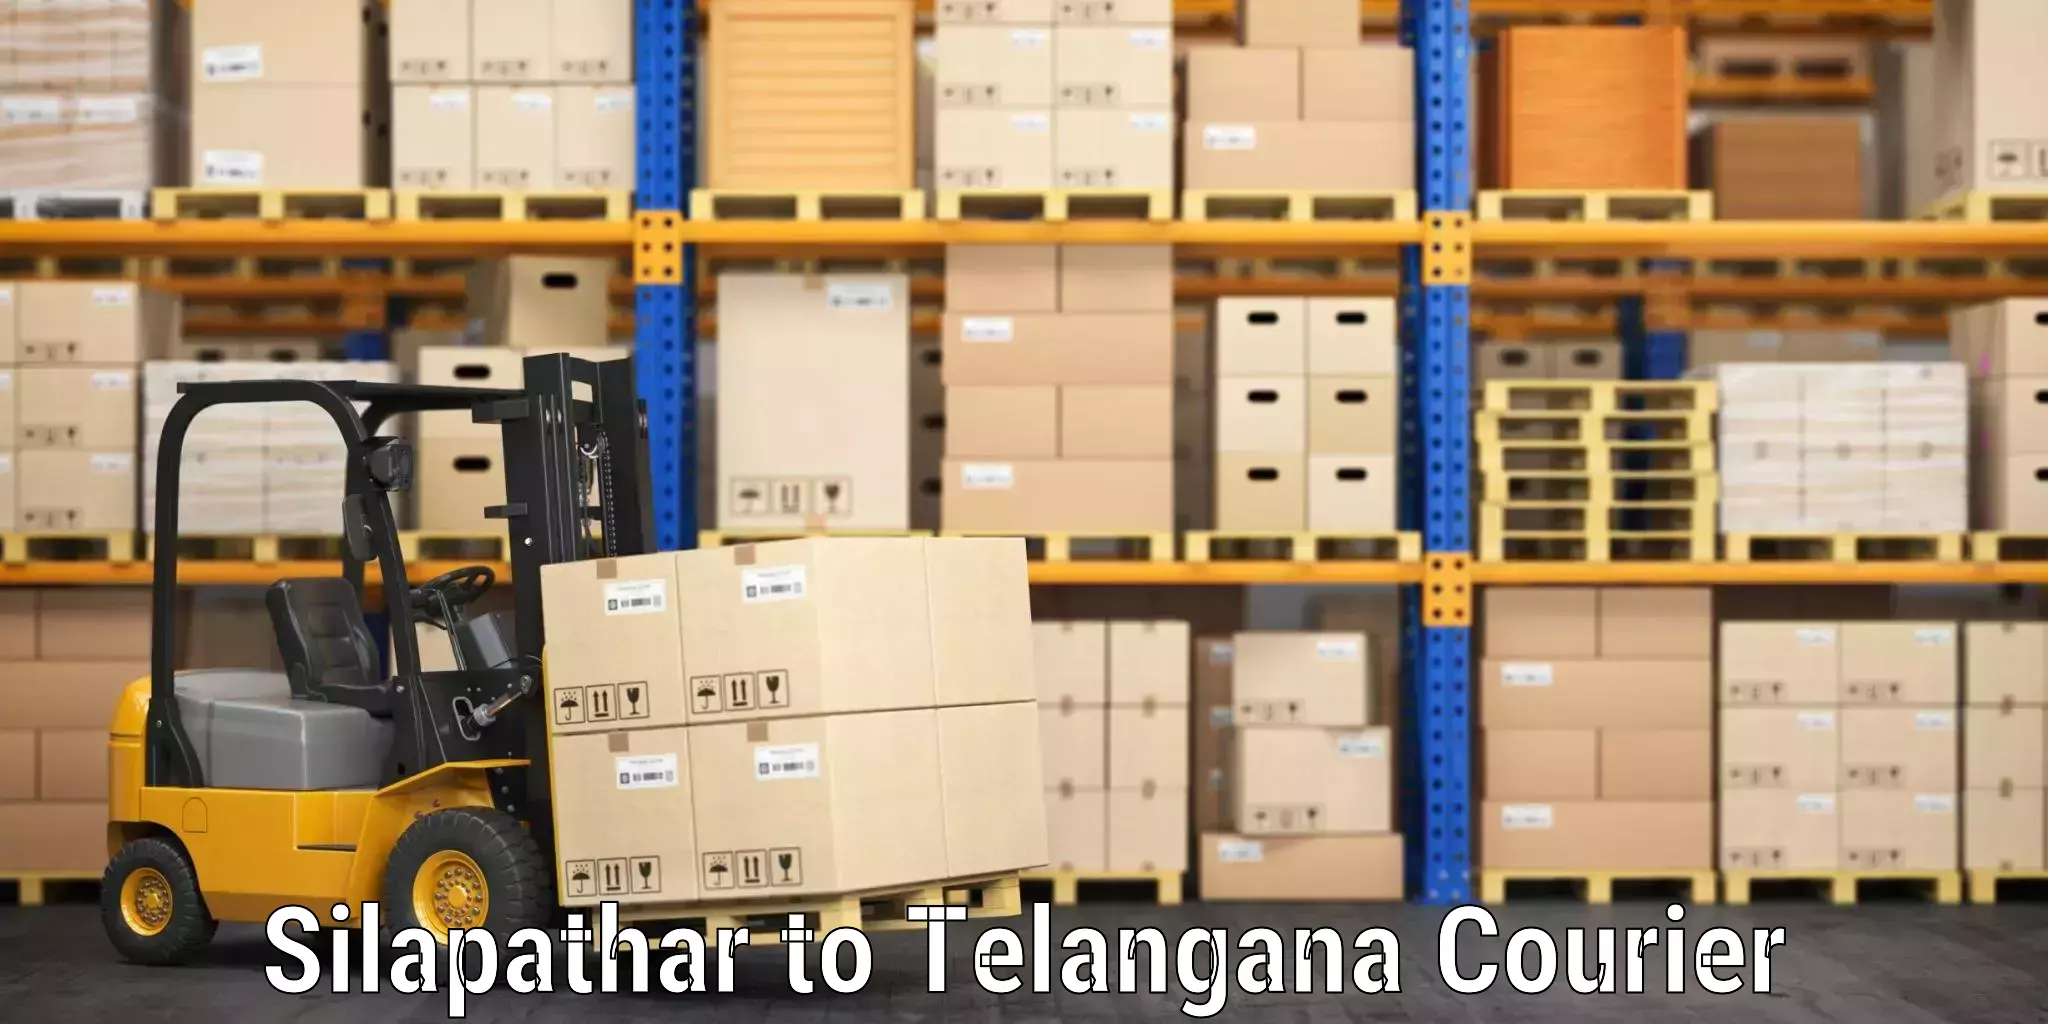 Luggage transport consultancy Silapathar to Veenavanka